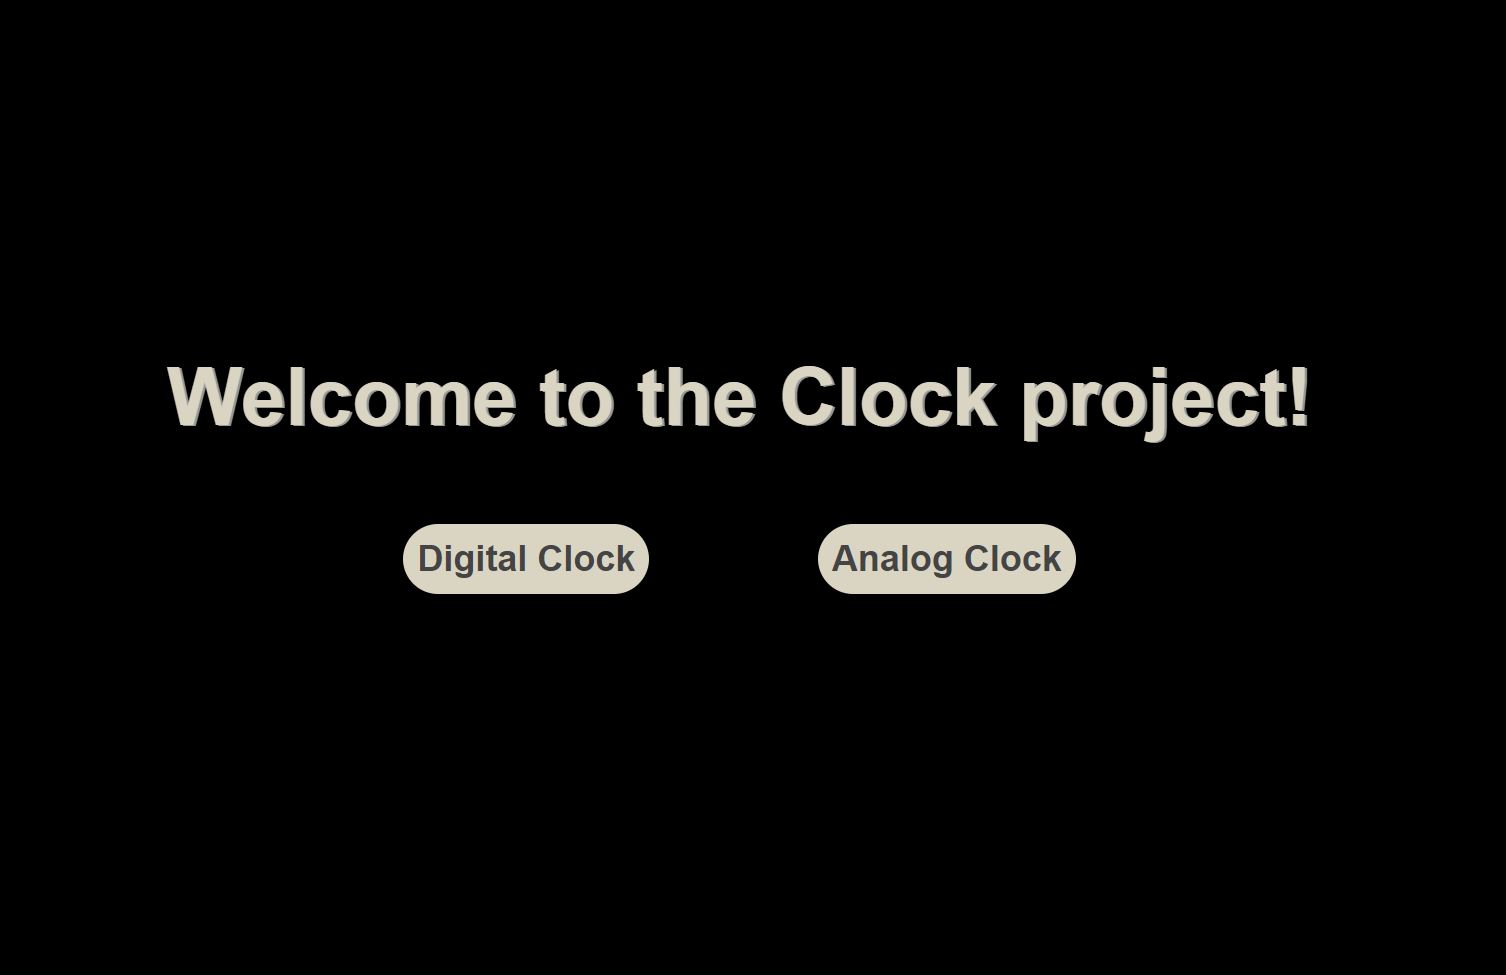 Clock Project